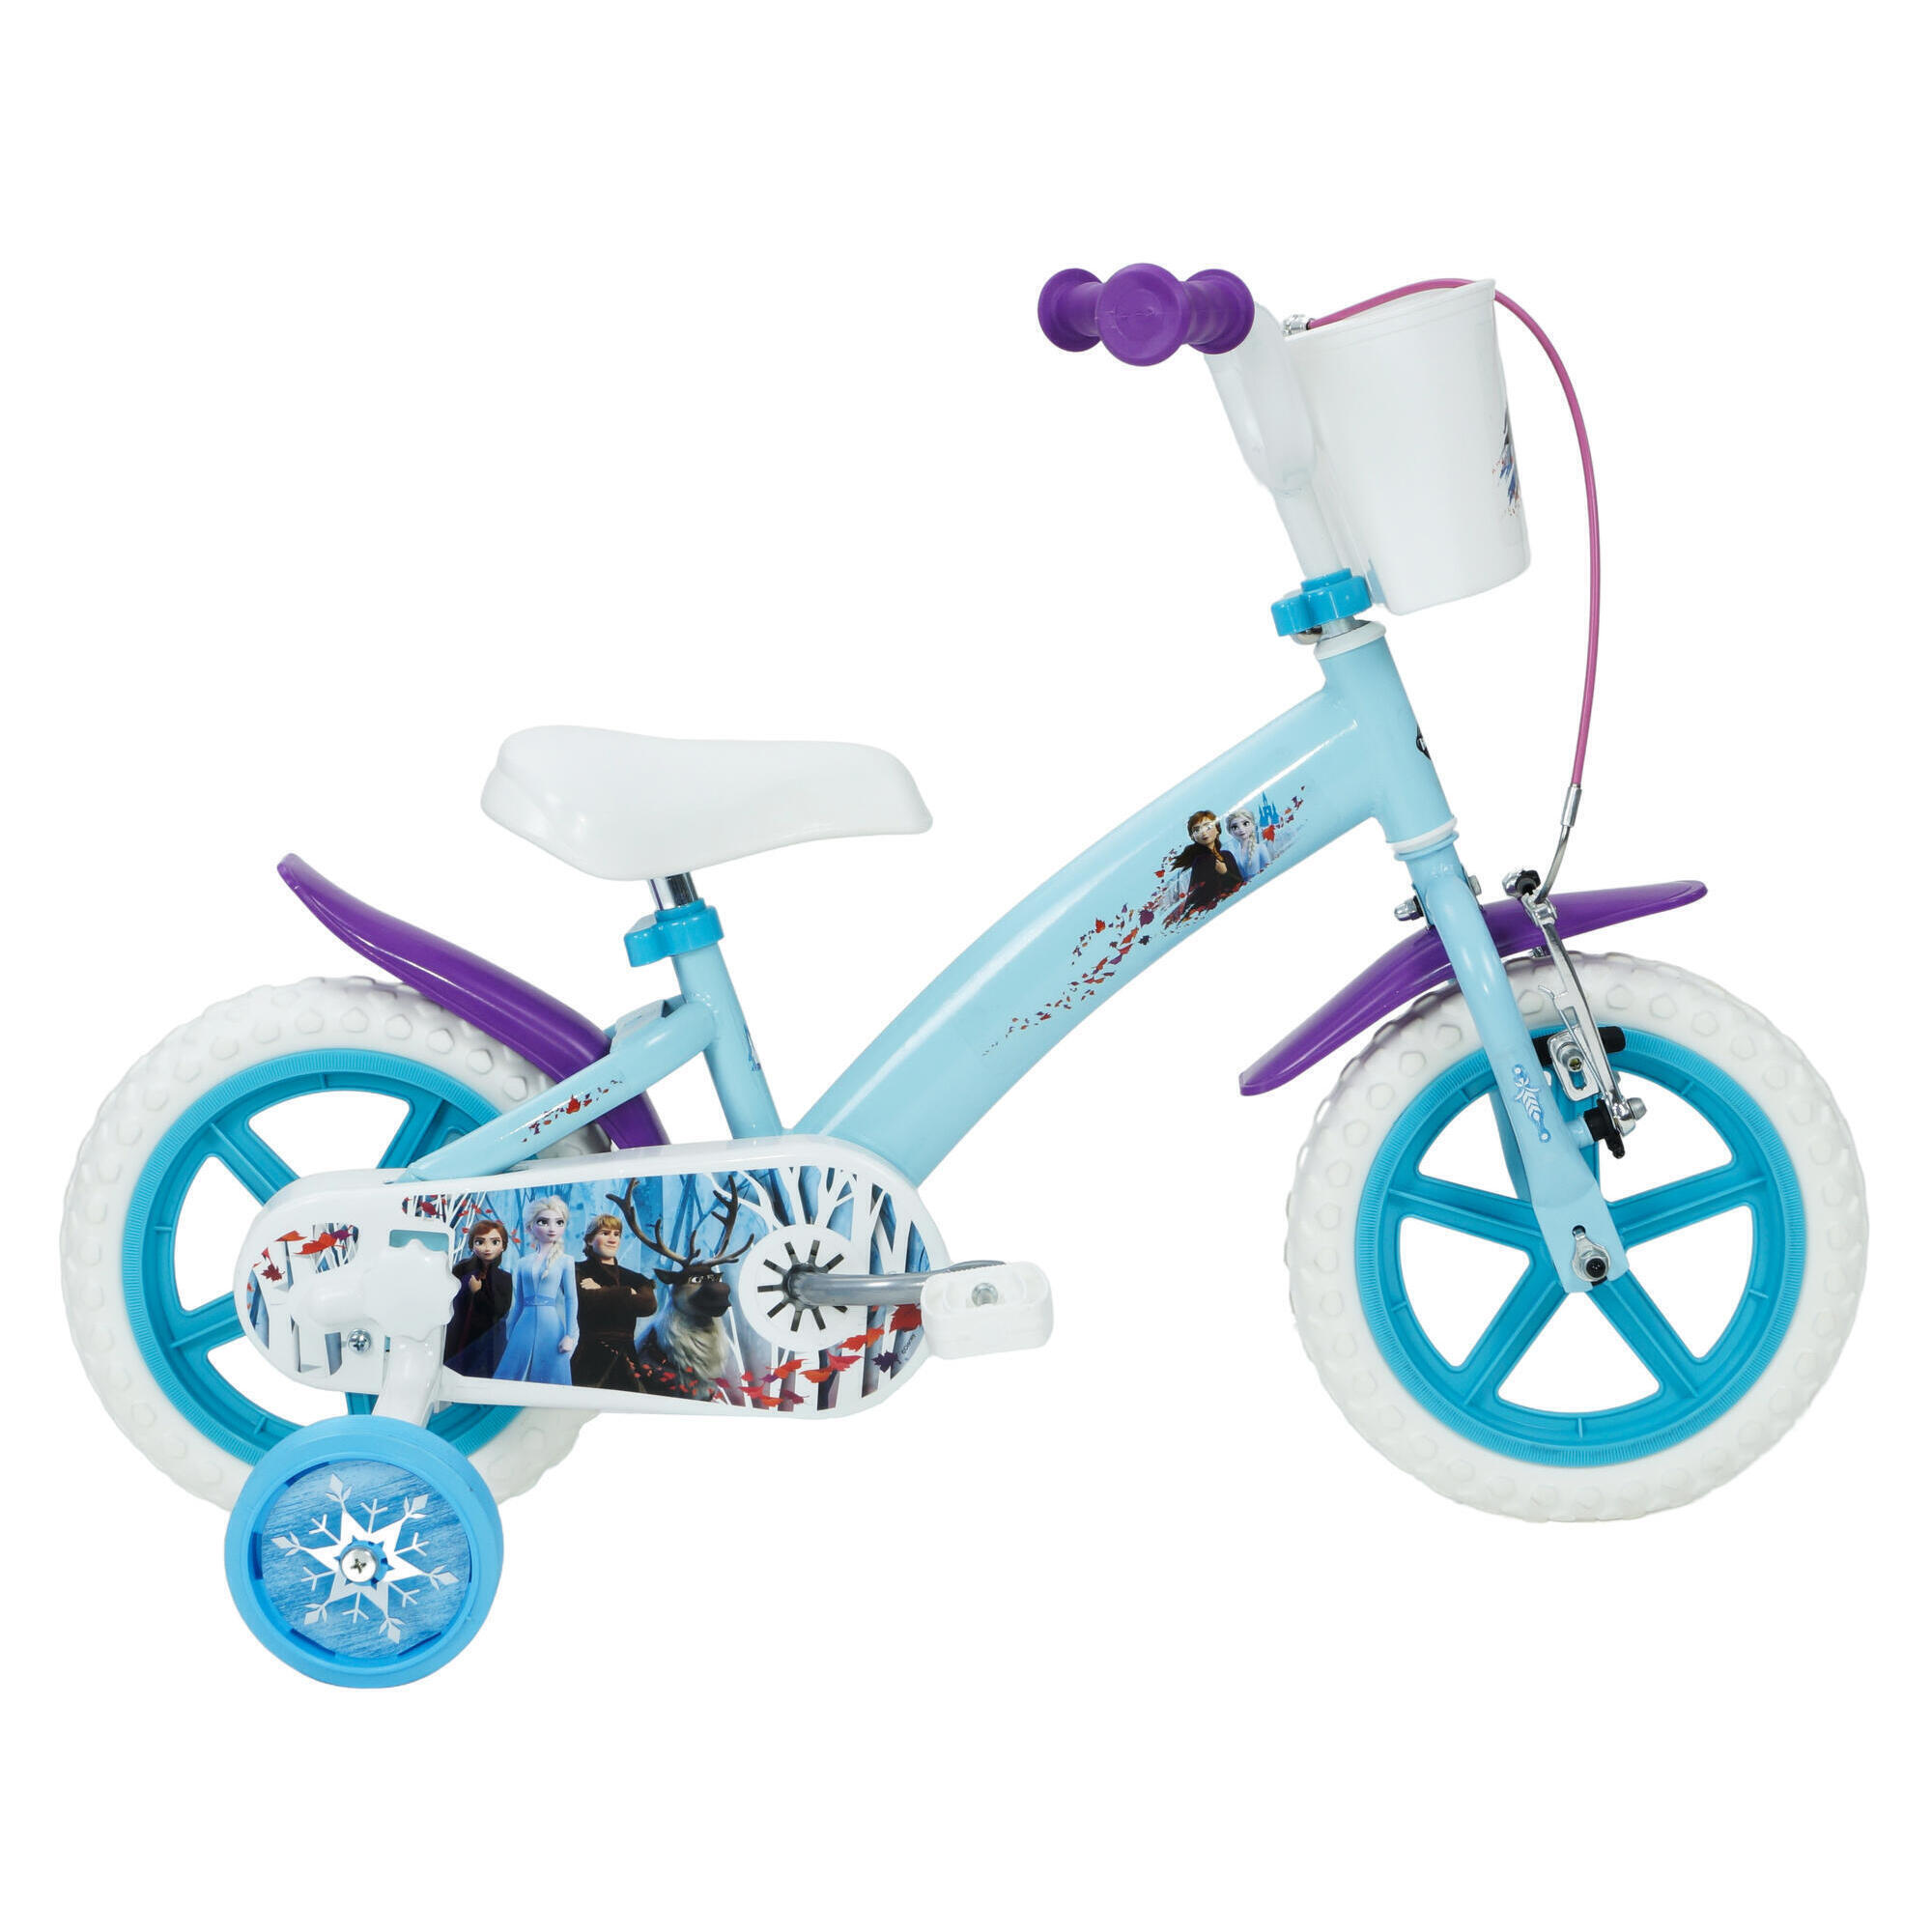 Huffy Disney Frozen 12" Kids Bike - Blue/White 1/3